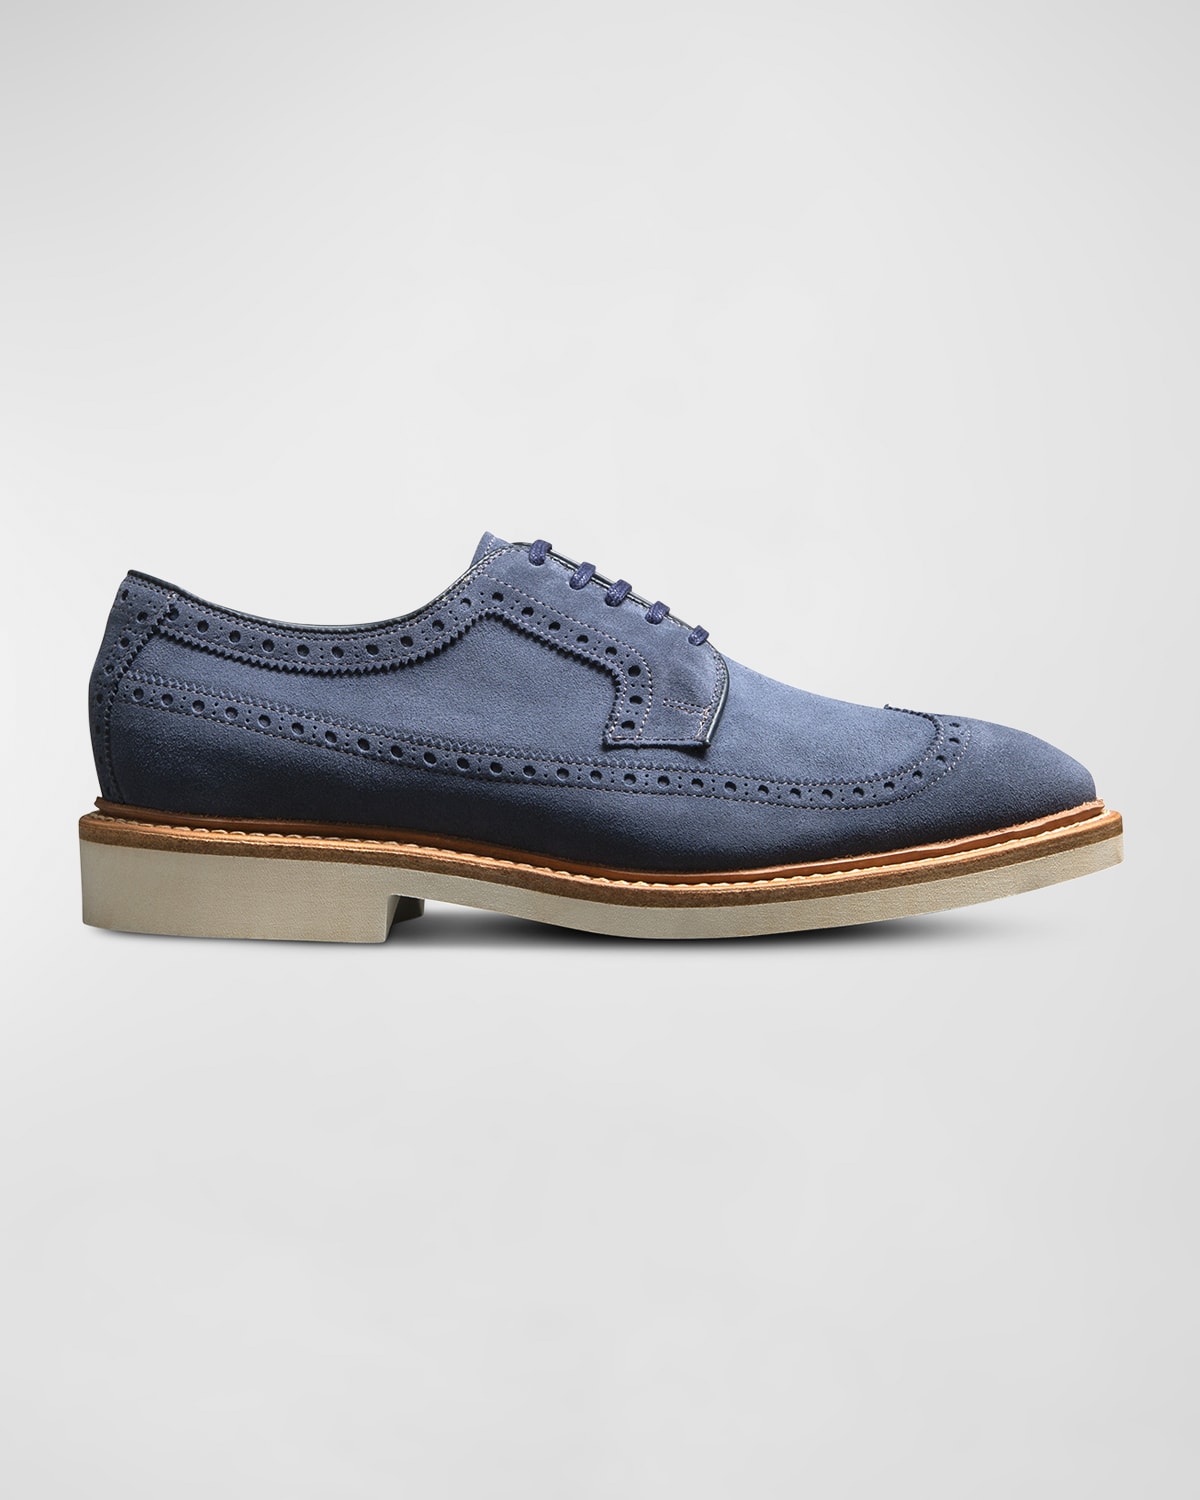 Brunello Cucinelli Men's Suede Wingtip Brogue Derby Shoes | Neiman Marcus